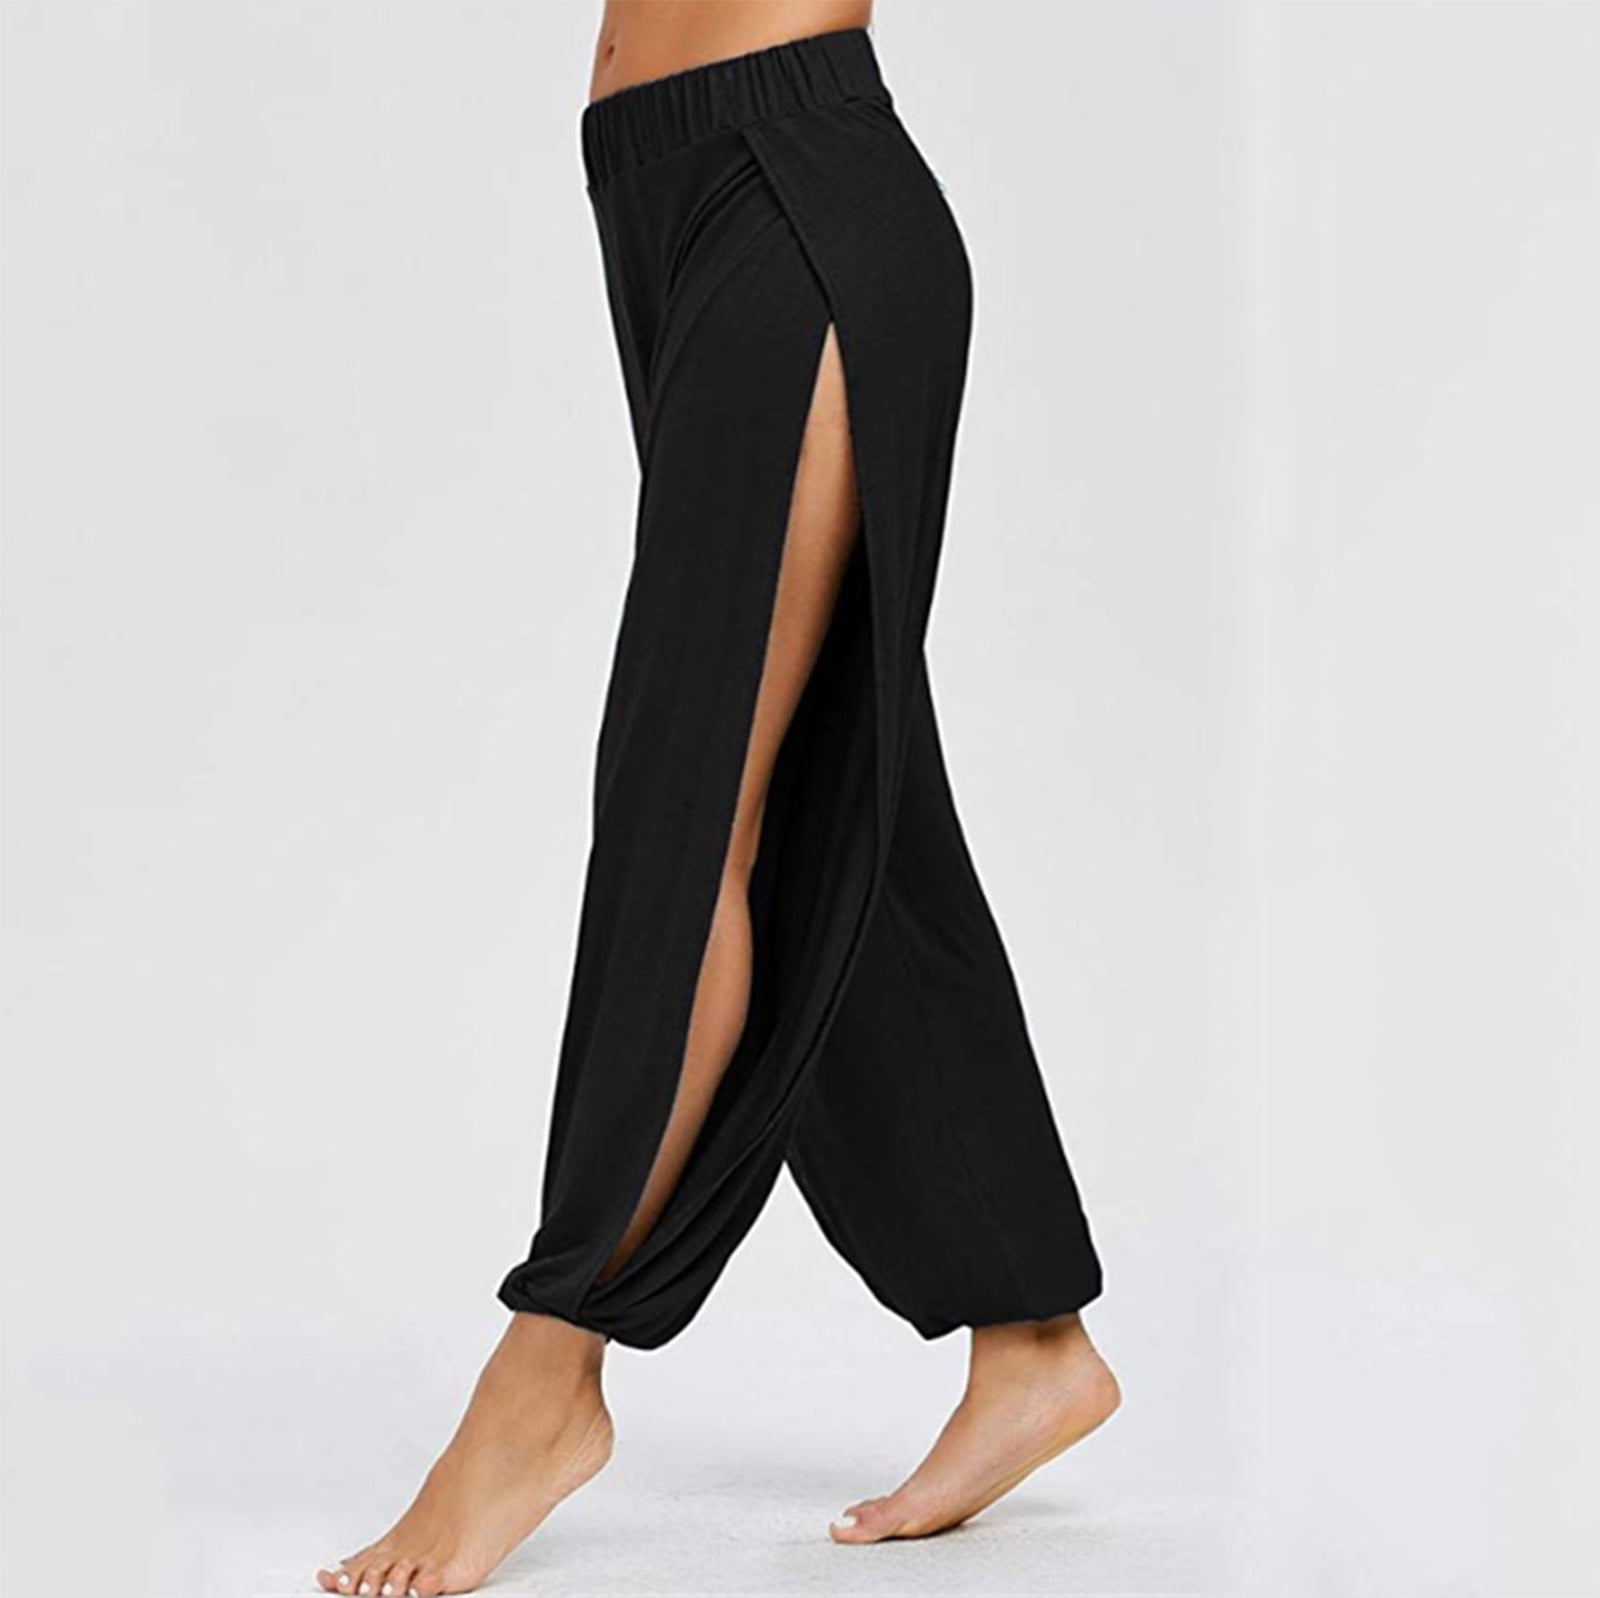 MRULIC yoga pants Women's Solid Color Split High Stretch Exercise Running  Yoga Leisure Pants Black + M